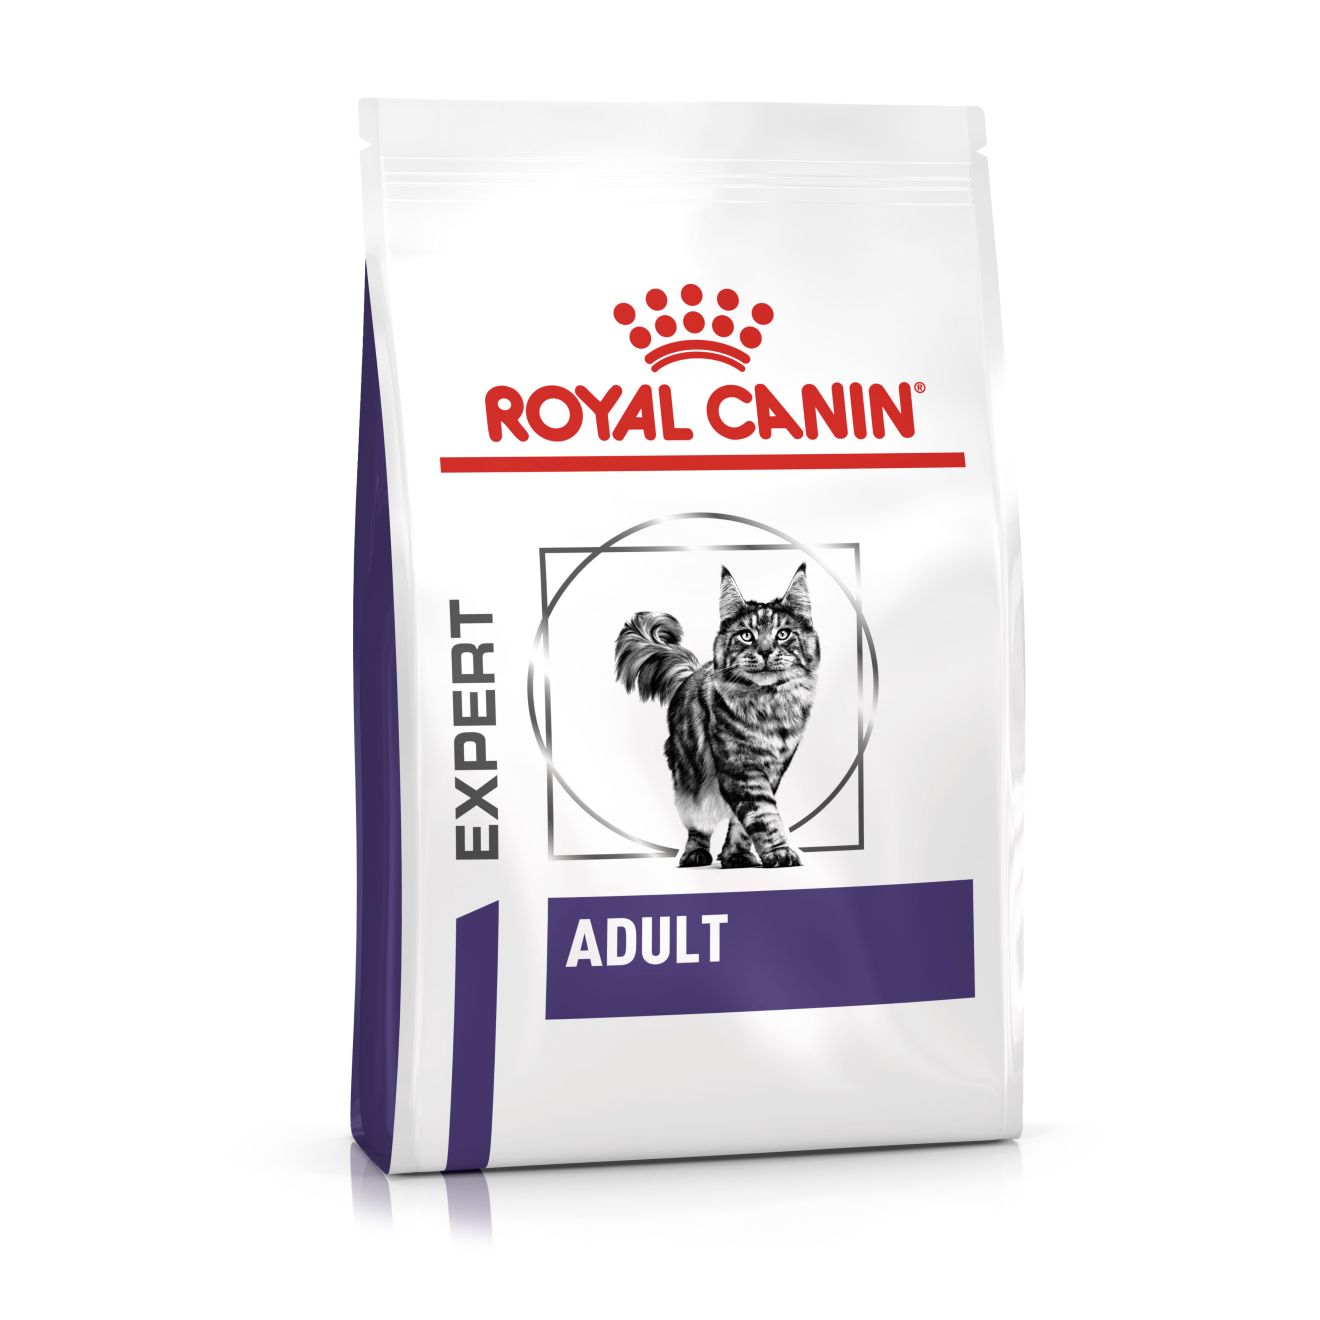 ROYAL CANIN Expert ADULT Trockenfutter für Katzen 2 kg (Katze)